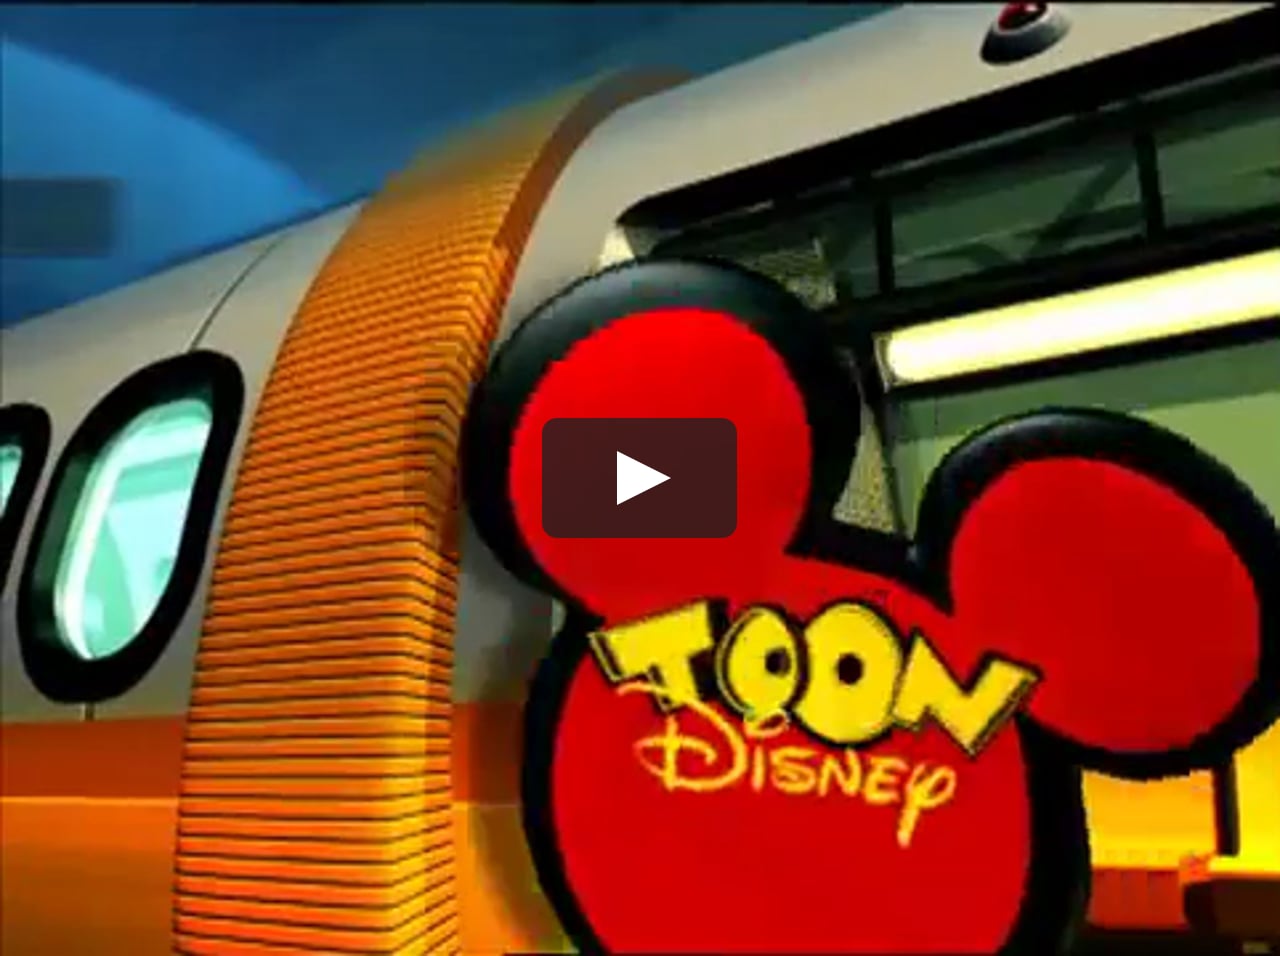 Toon Disney Worldwide - Train  - Vbox7[via  ].mp4 on Vimeo